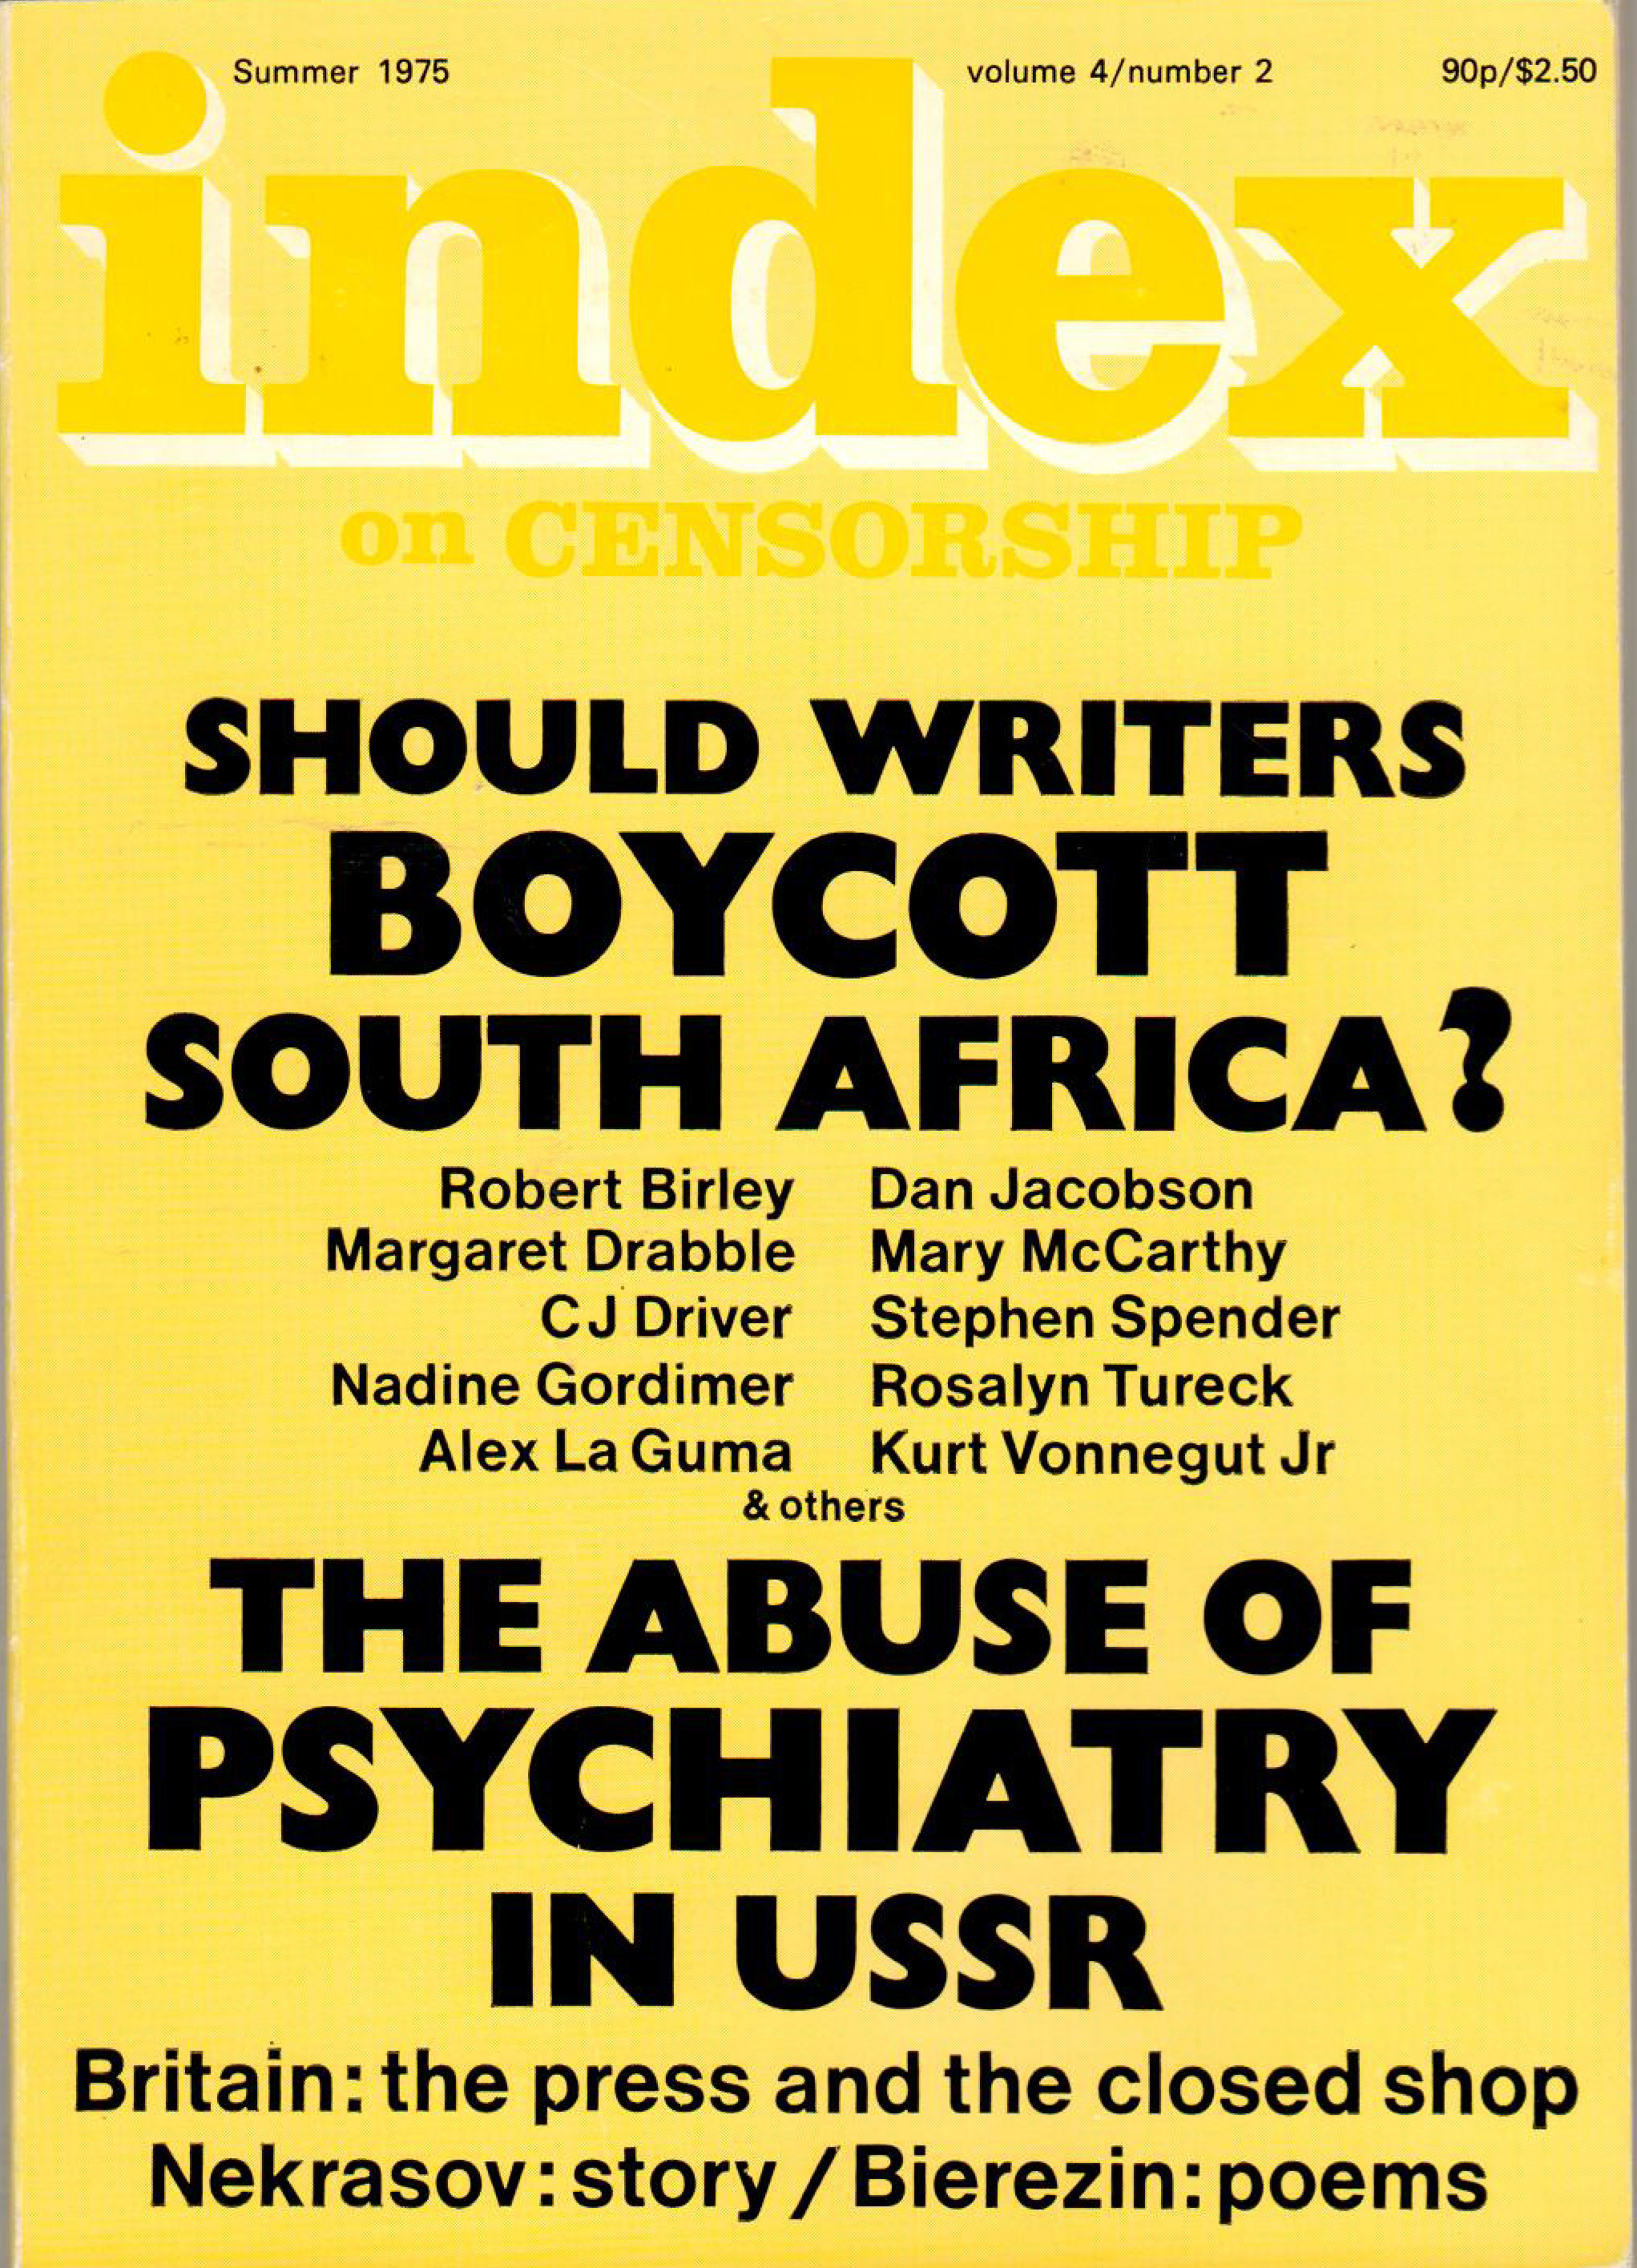 Should writers boycott South Africa?, the Summer 1975 issue of Index on Censorship magazine